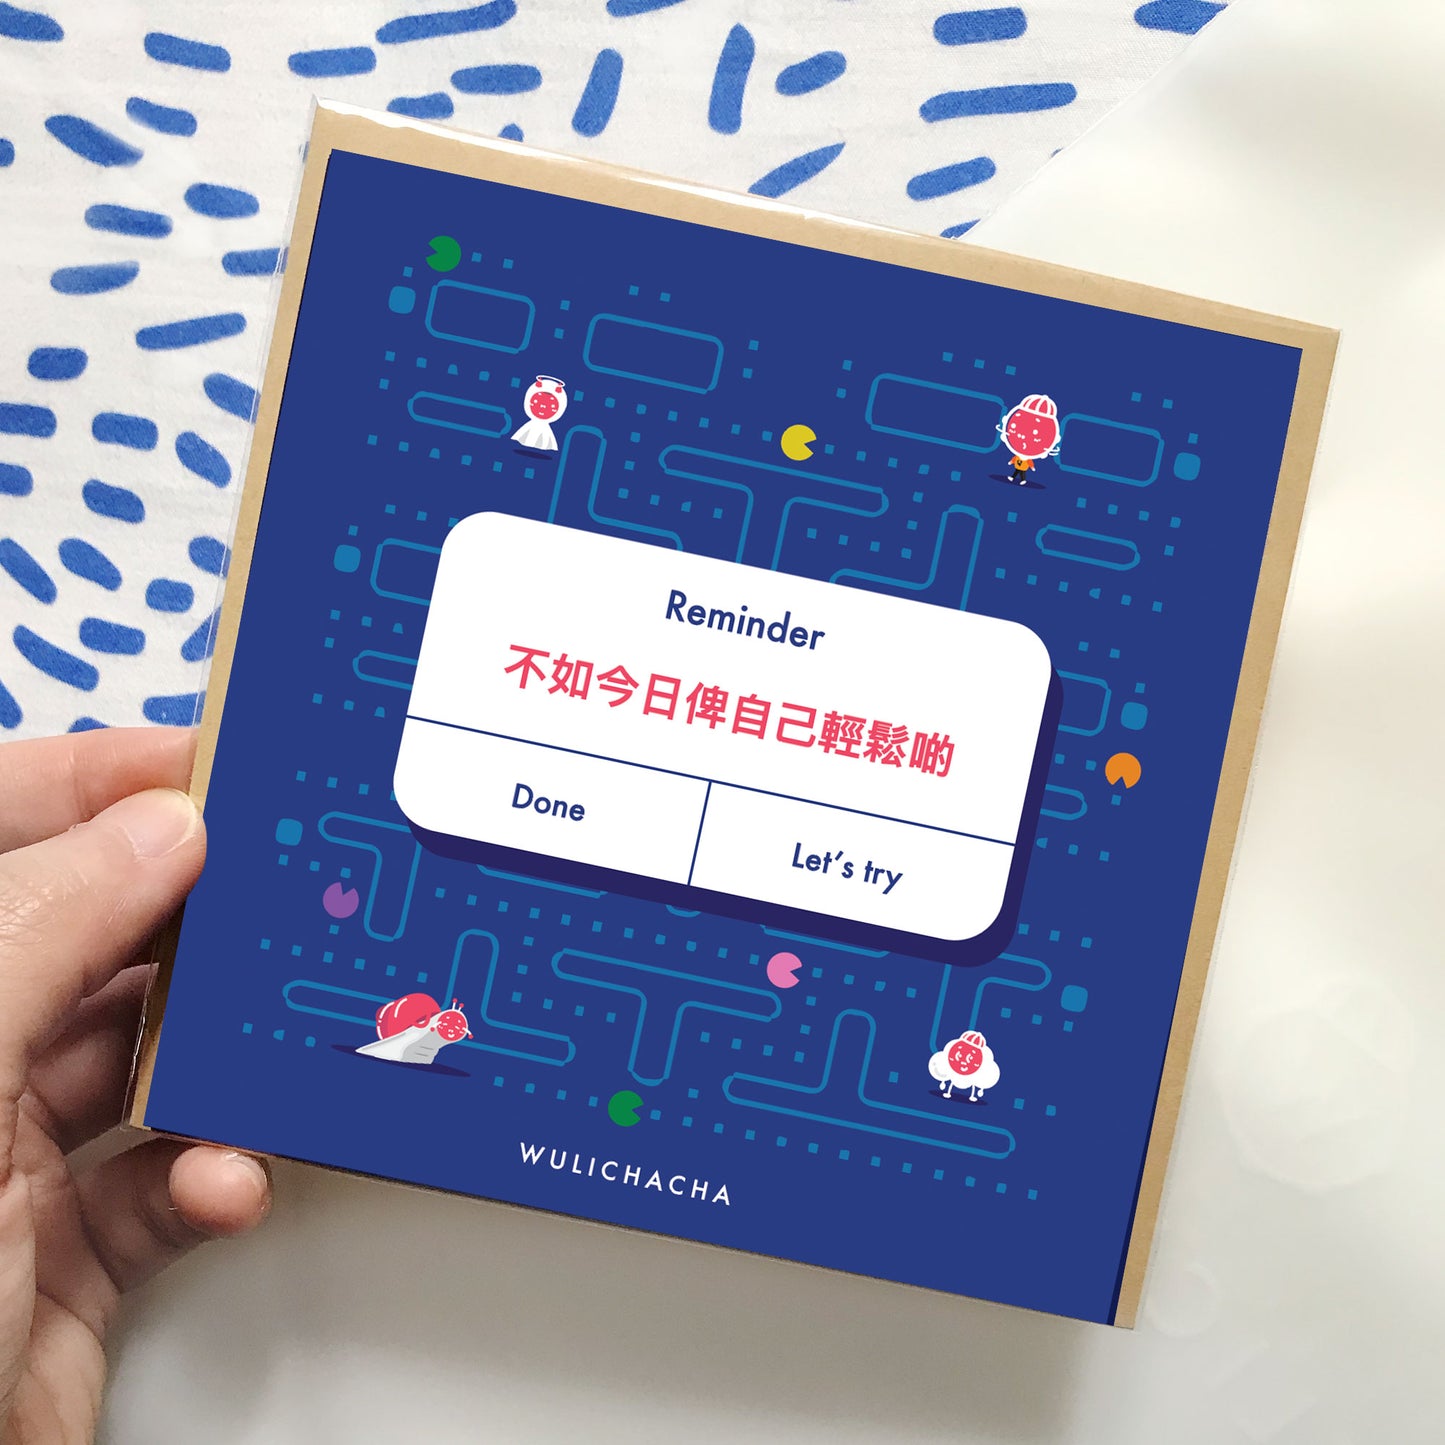 Wulichacha greeting card 心意卡 (不如今日俾自己輕鬆啲)